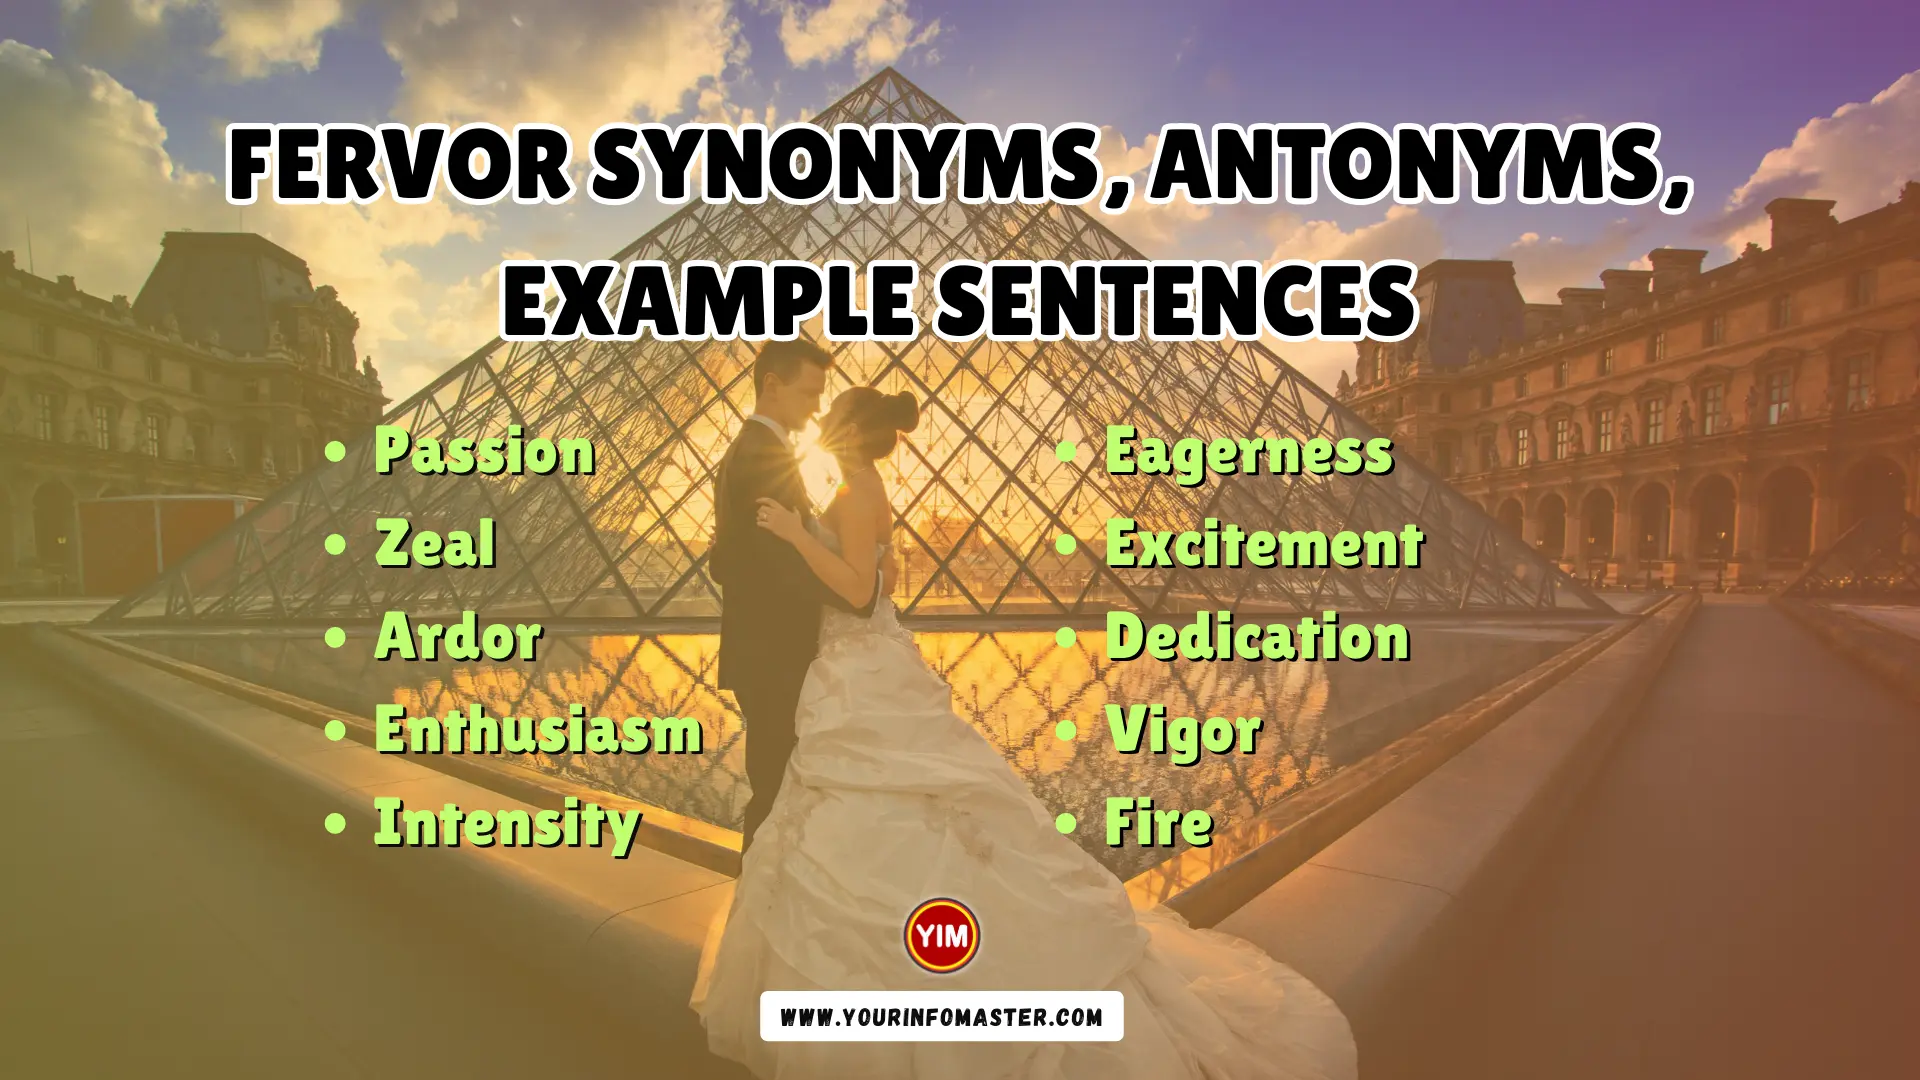 Fervor Synonyms, Antonyms, Example Sentences